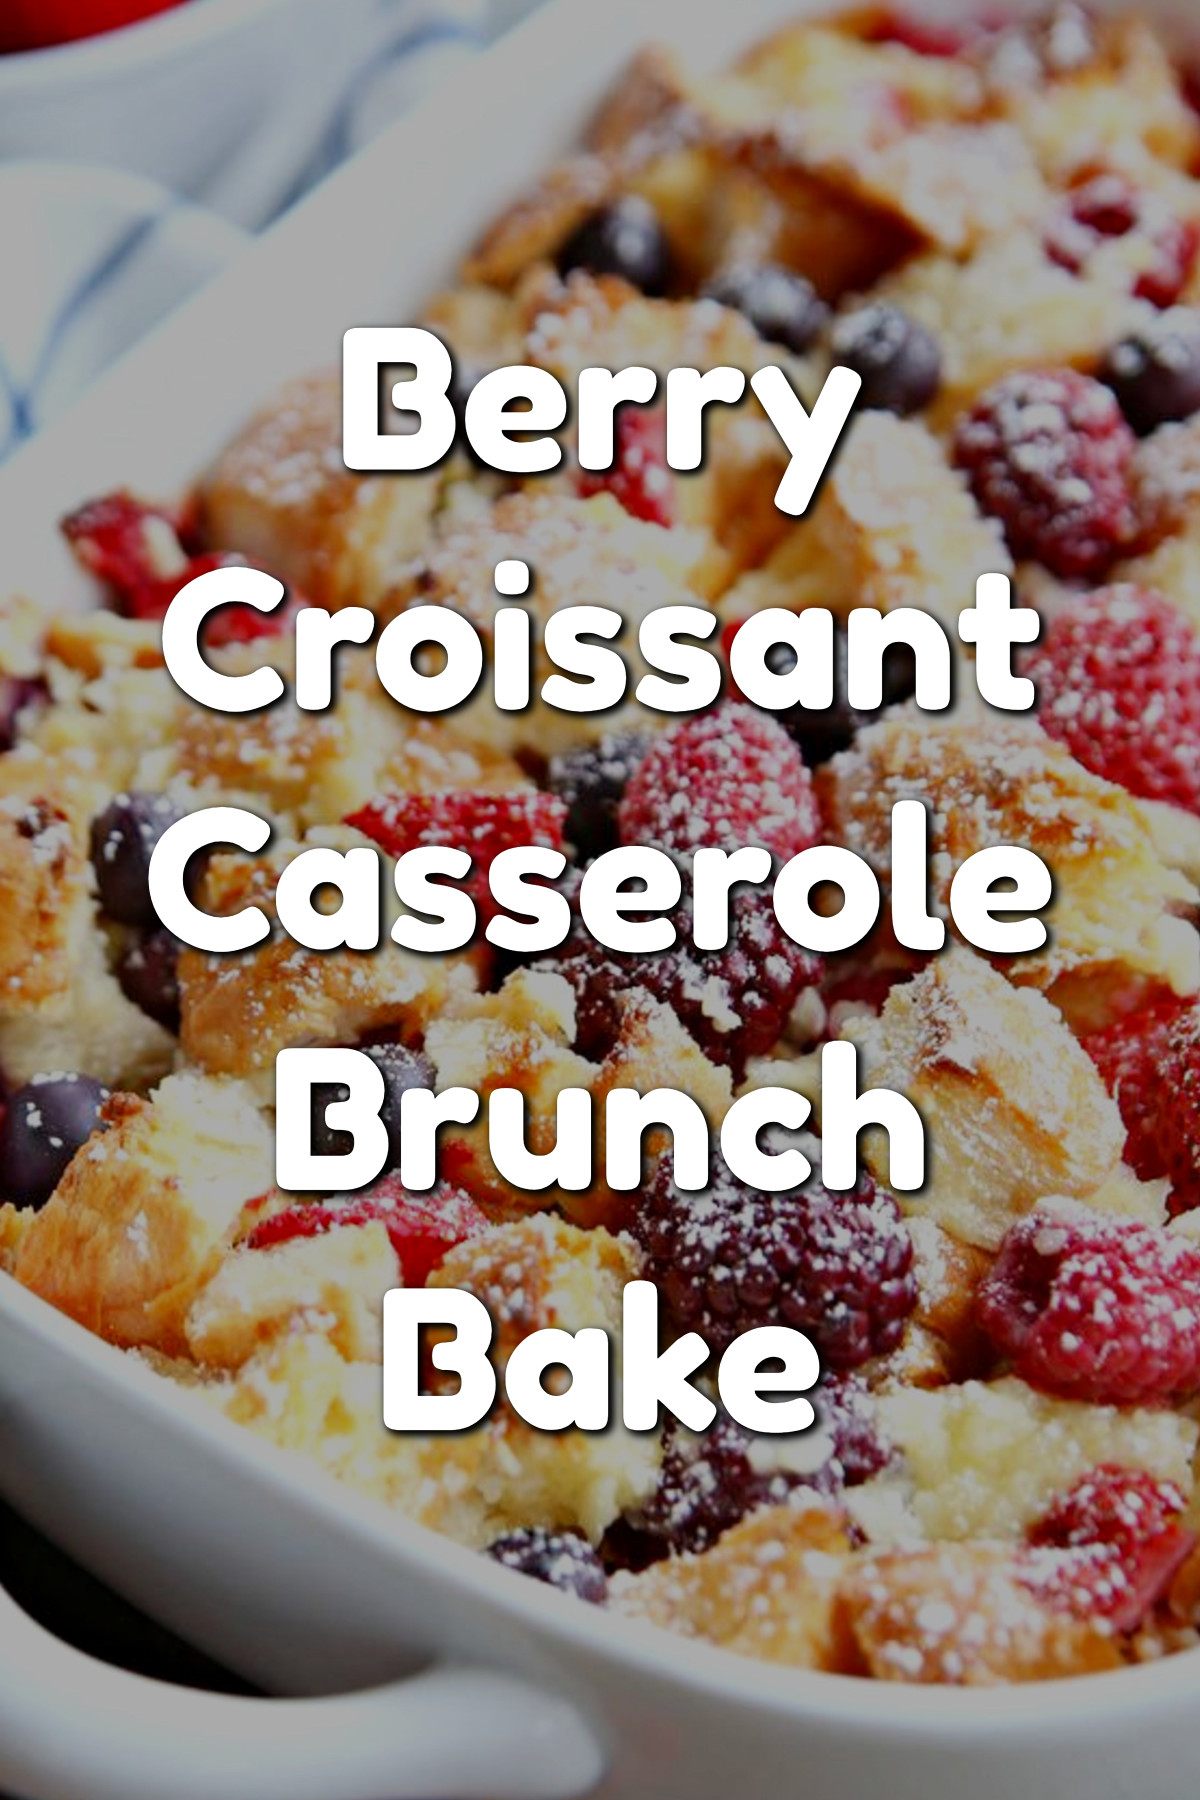 brunch food ideas - Berry Croissant Casserole Brunch Bake